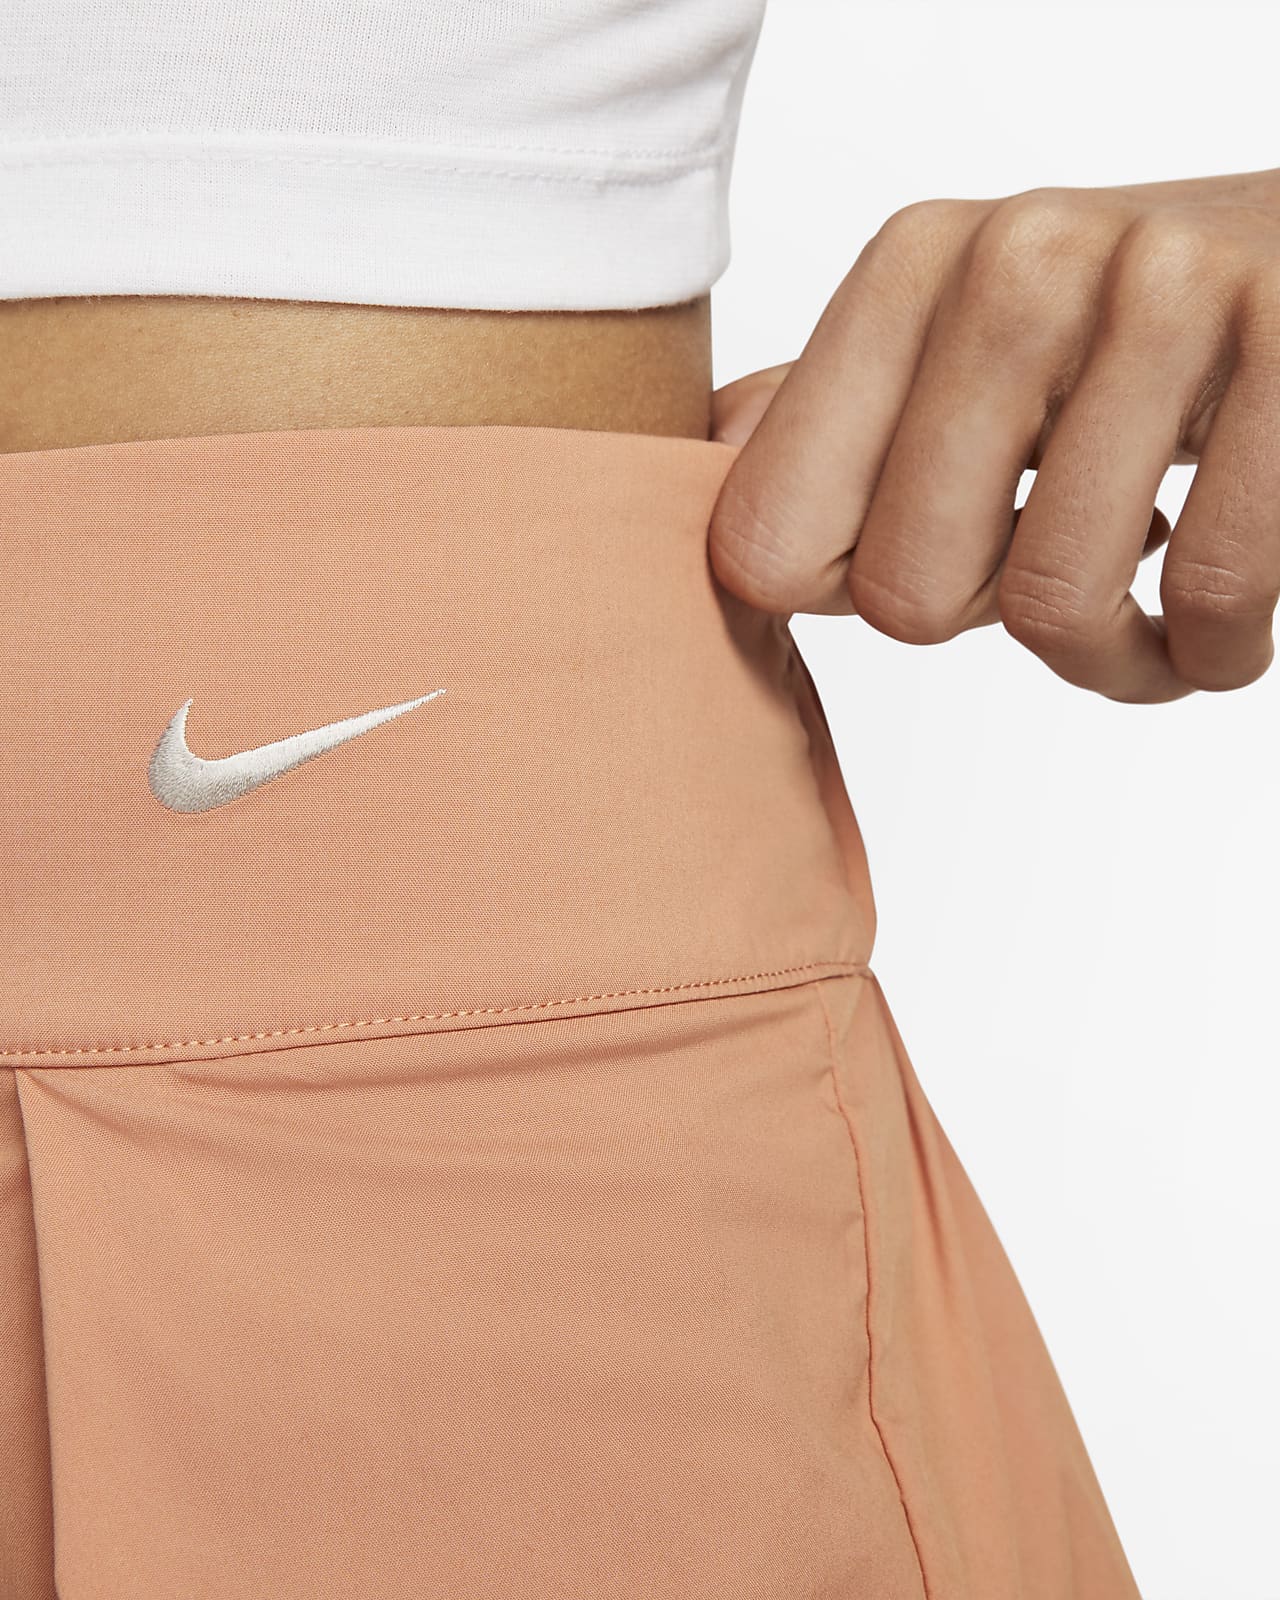 Nike Sportswear Collection Women's Trouser Shorts